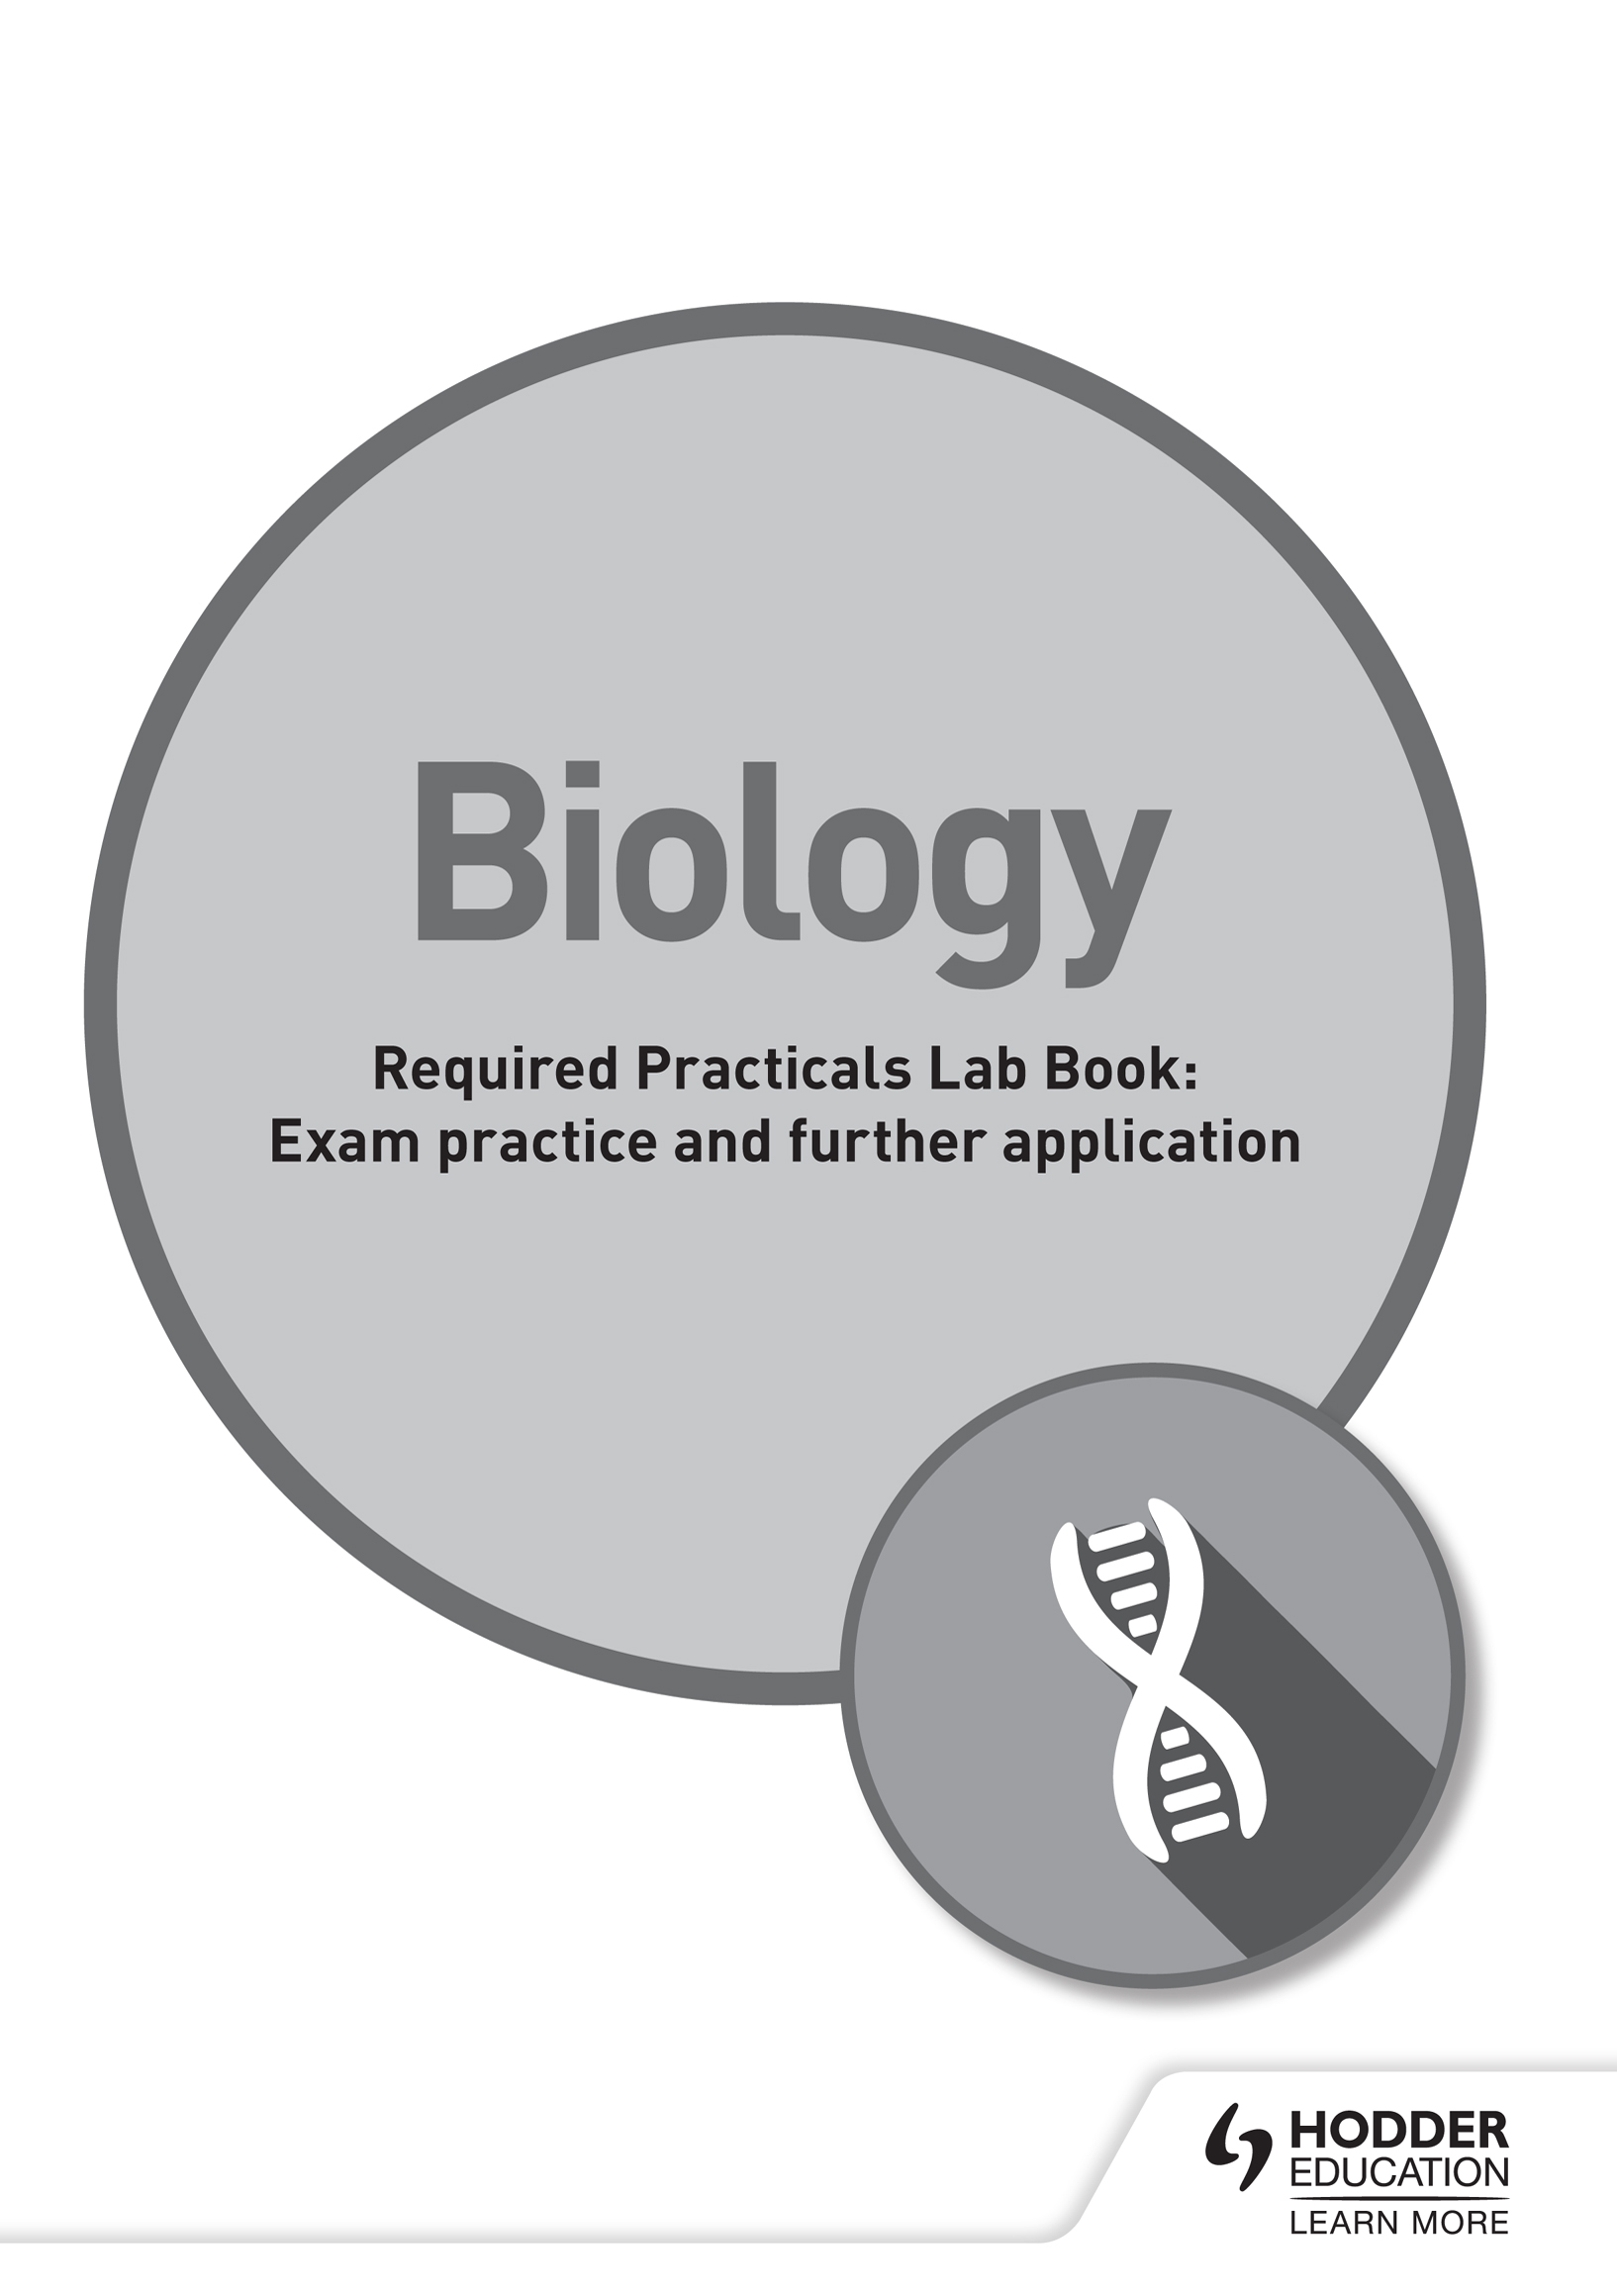 AQA GCSE (9-1) Biology Student Lab Book